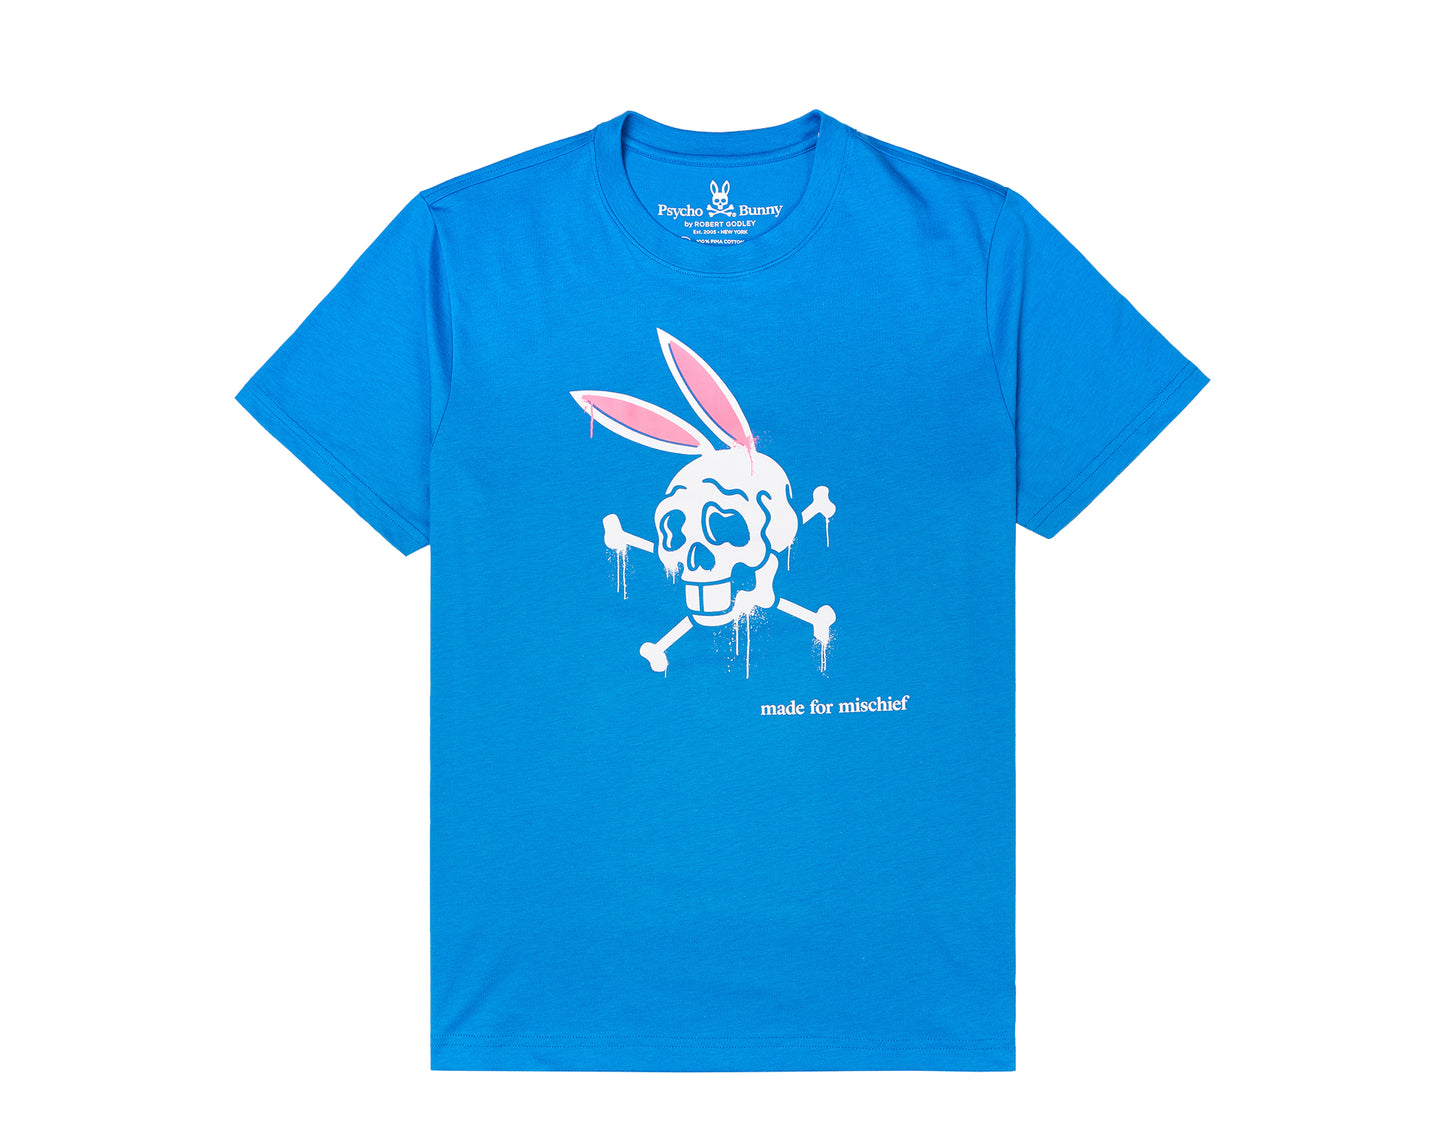 Psycho Bunny Gorton Skull Graphic Seaport Blue Men's Tee Shirt B6U368F1PC-SPR